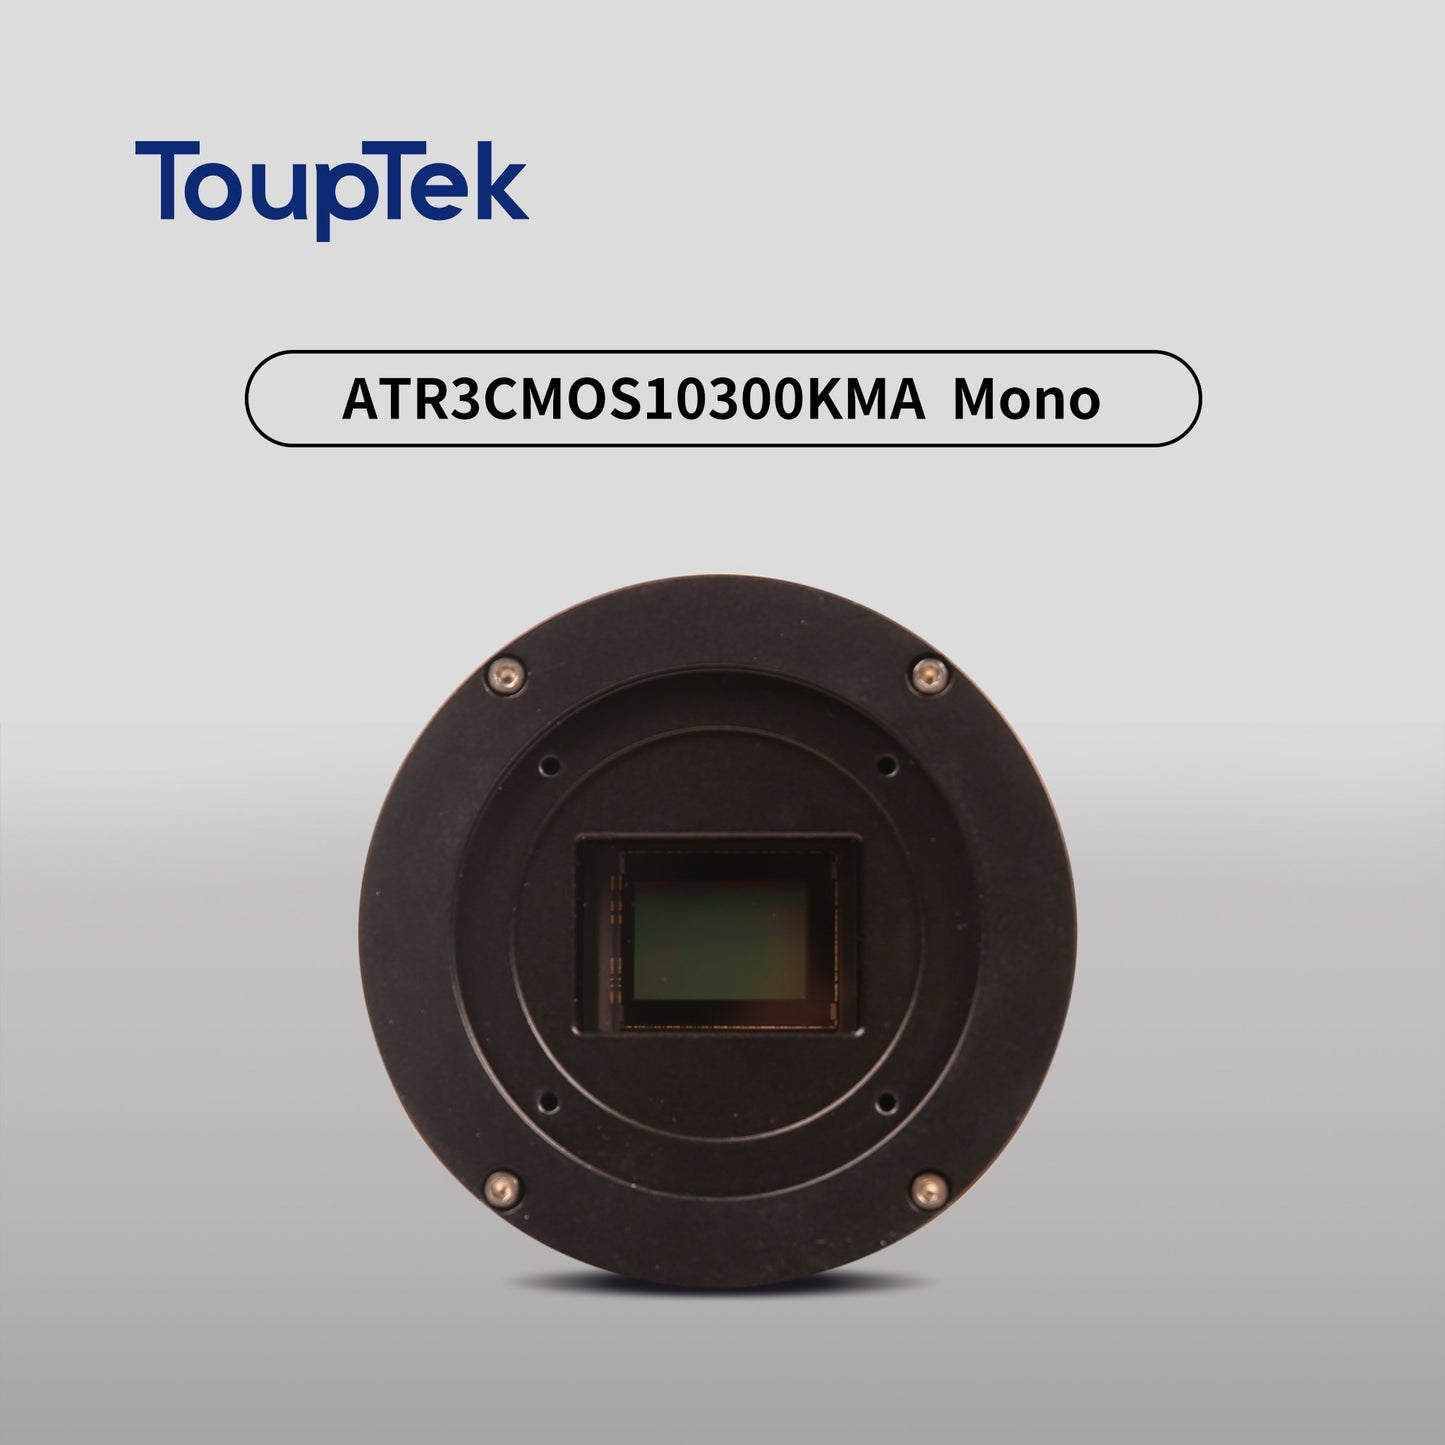 ATR3CMOS10300KMA IMX492 Mono Camera